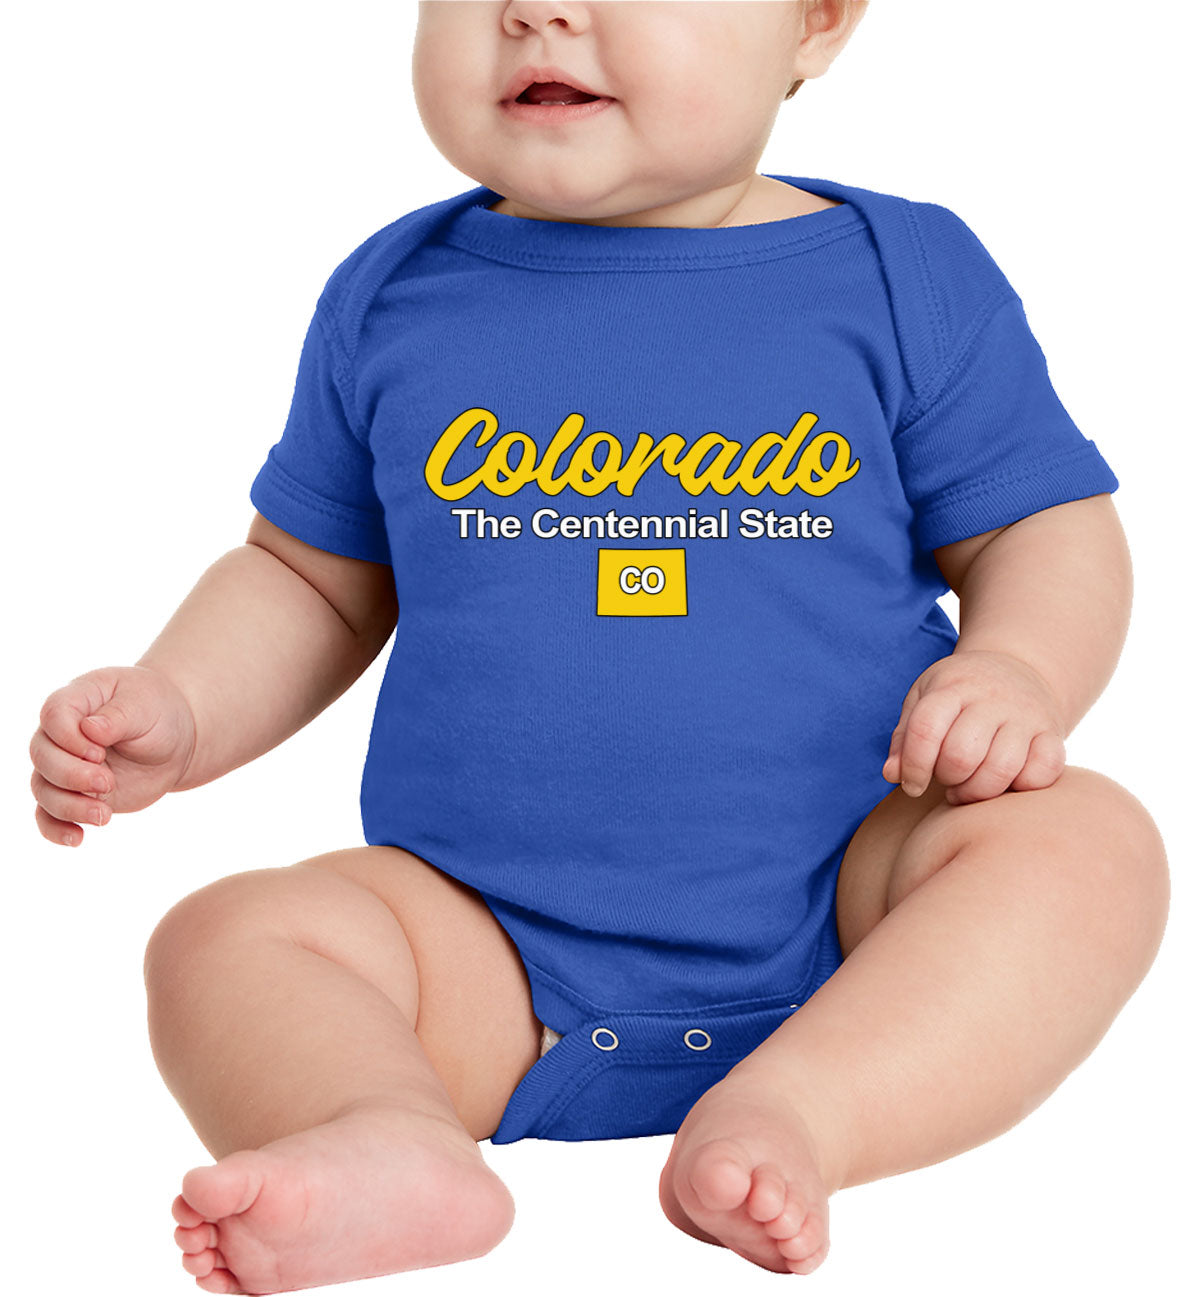 Colorado The Centennial State Baby Onesie